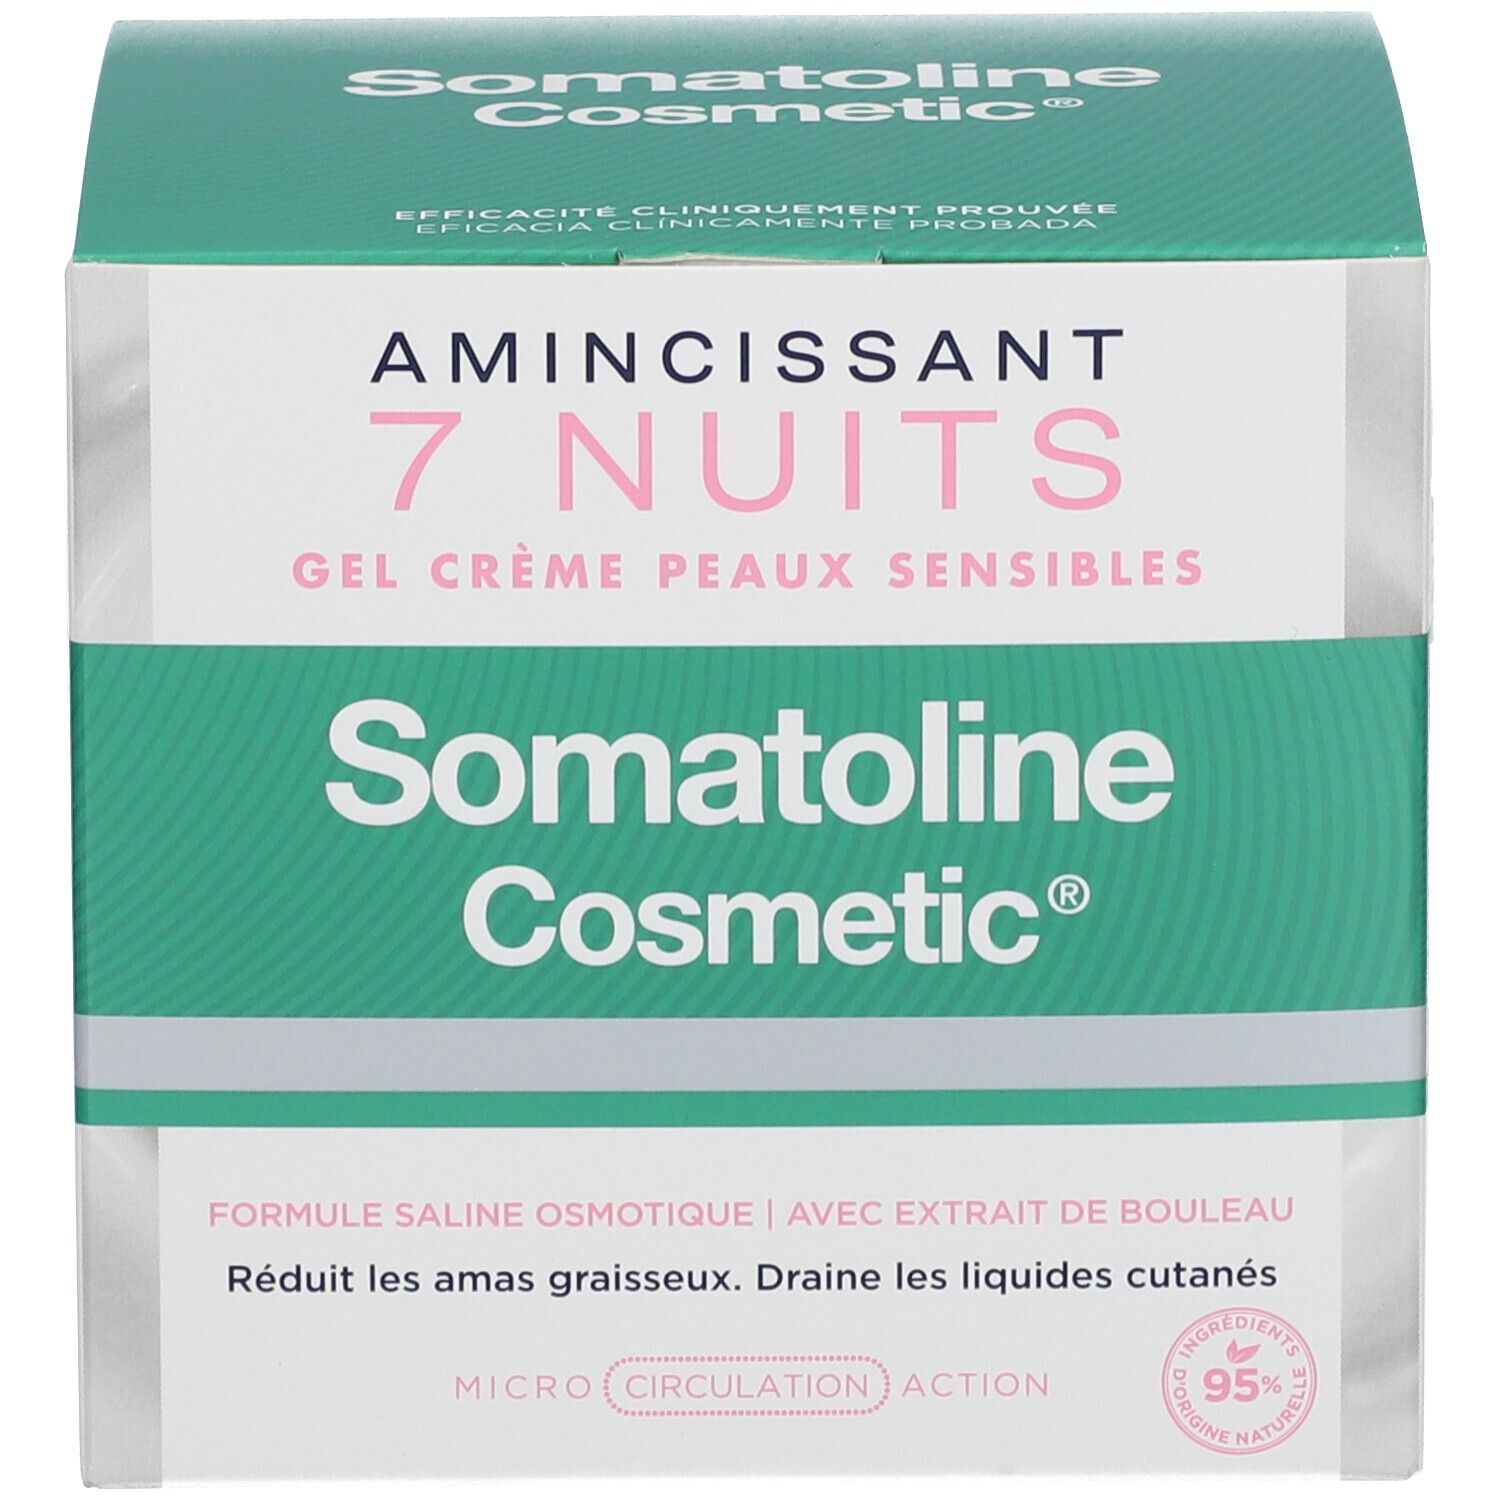 Somatoline Cosmetic® 7 Nuits Natural Peau Sensible